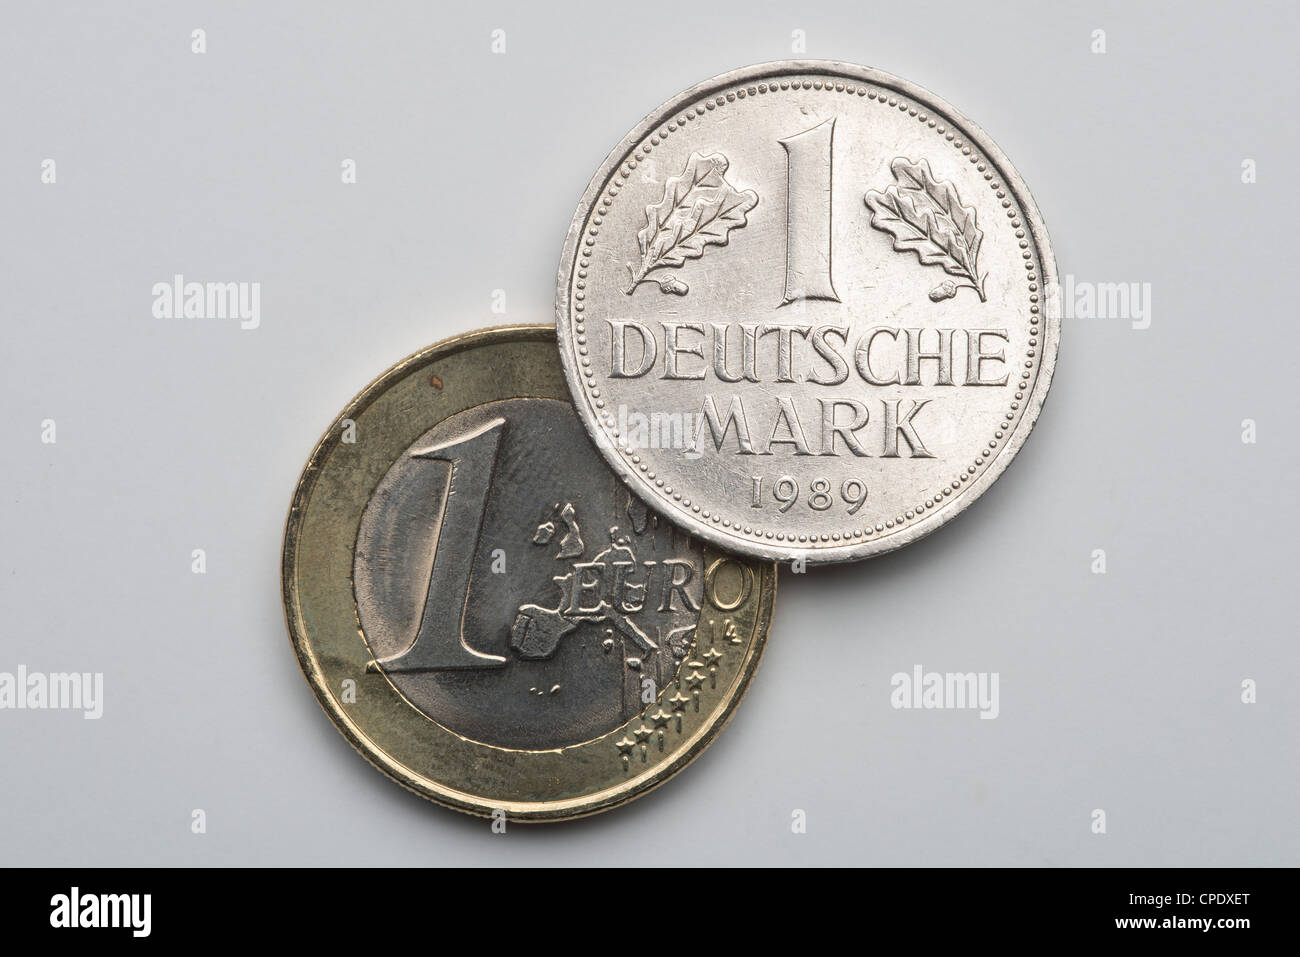 the crisis of euro. The powewr of german economy Stock Photo